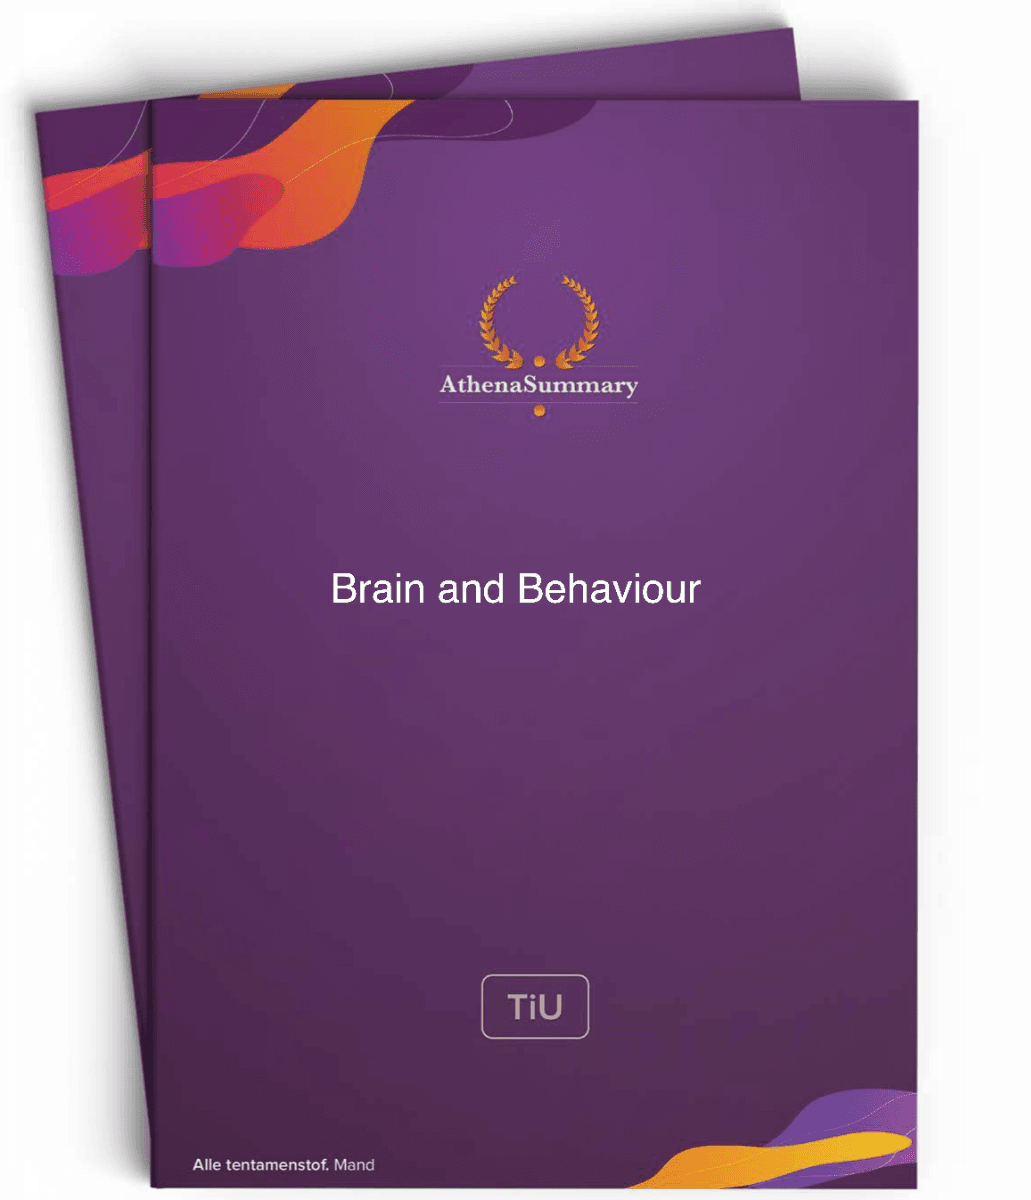 Literature Summary: Brain and Behaviour